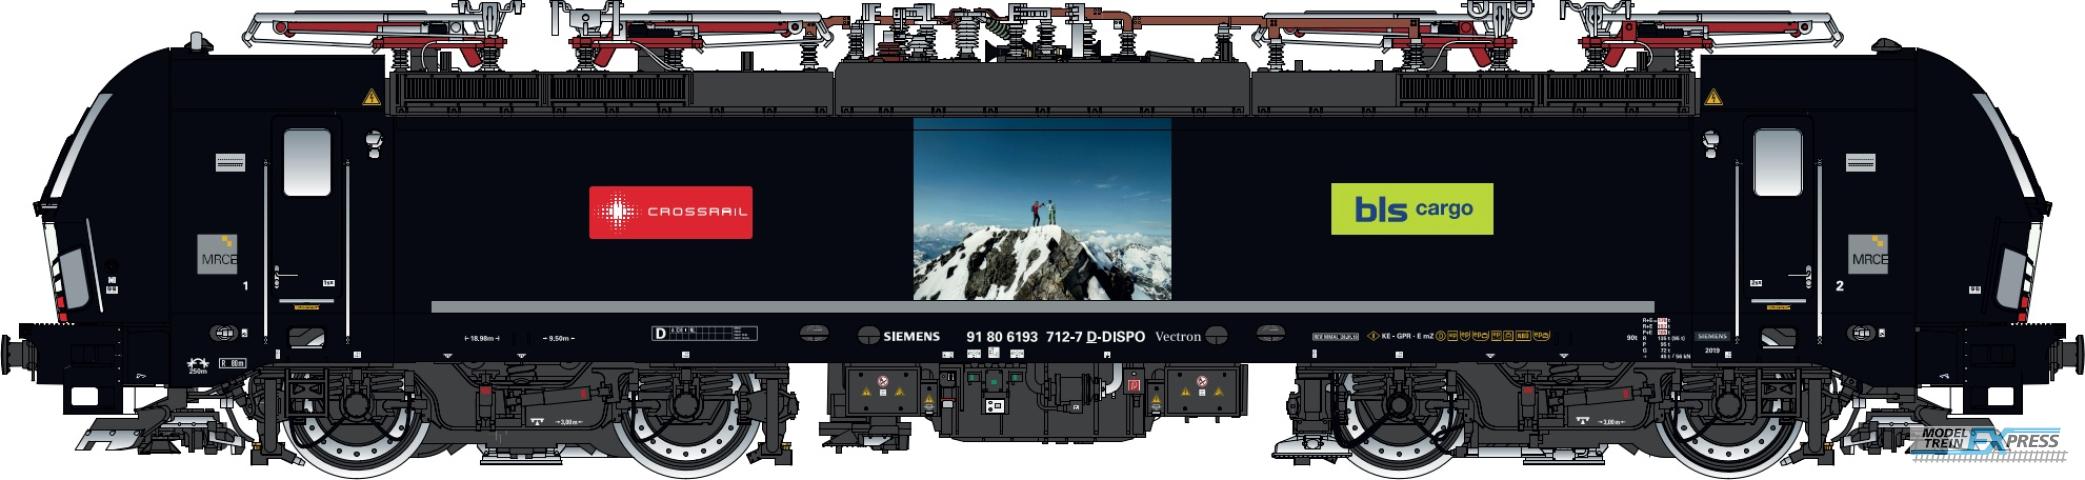 LS Models 17117 BLS Cargo/Crossrail/MRCE Vectron MS, 91 80 6193 712-7 D-DISPO, 4 pantographs  /  Ep. VI  /  ---  /  HO  /  DC  /  1 P.